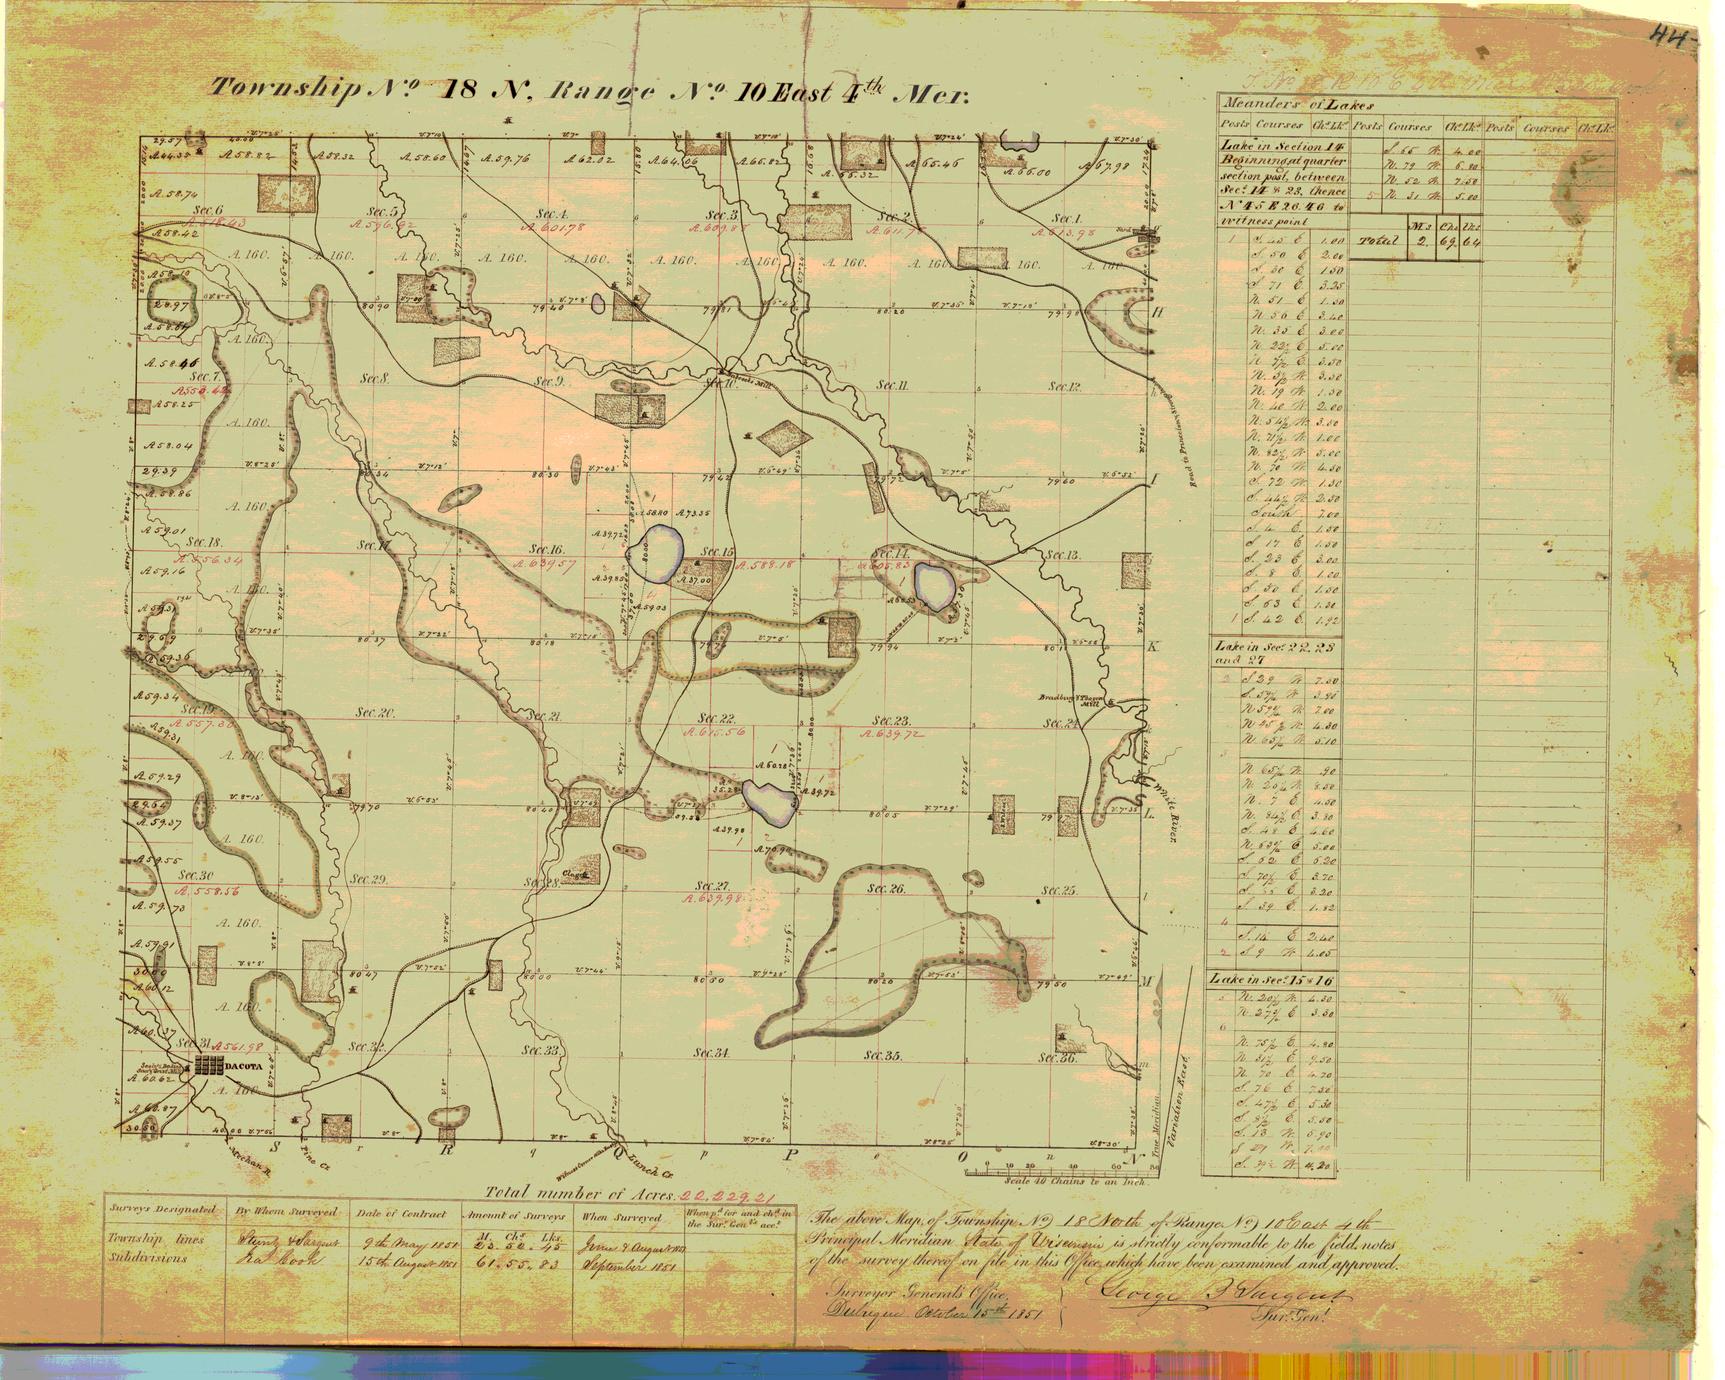 [Public Land Survey System map: Wisconsin Township 18 North, Range 10 East]